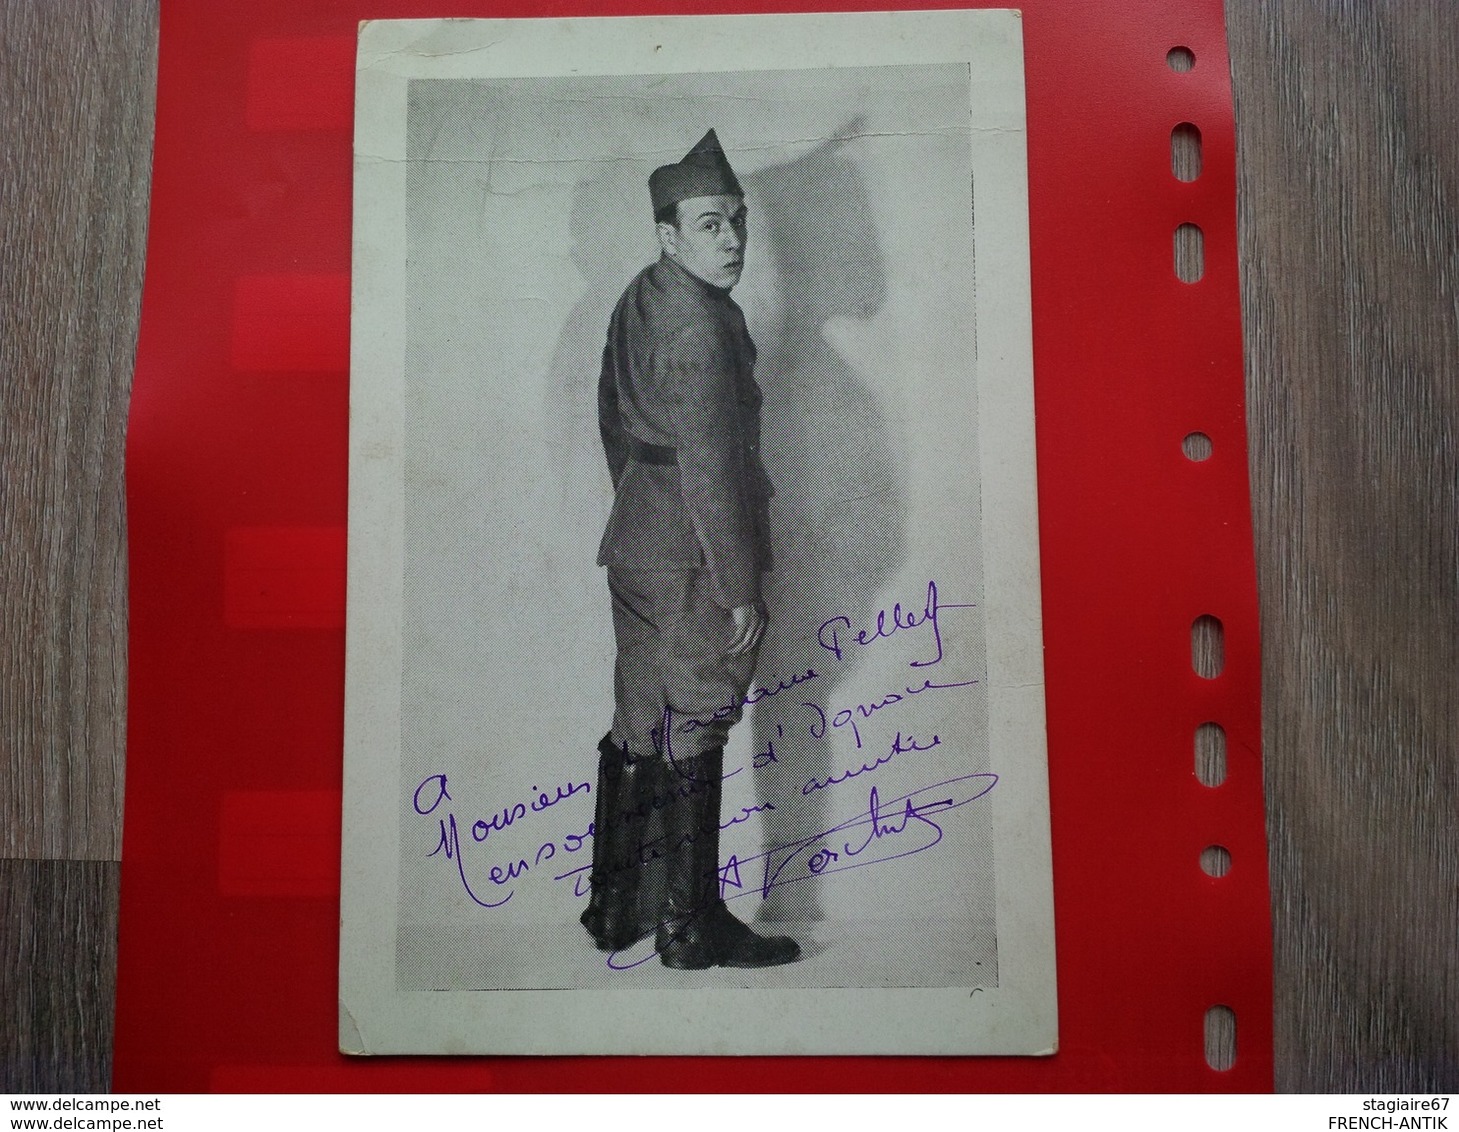 PHOTO DEDICACE A IDENTIFIER OPERA COMIQUE SOLDAT - Signed Photographs